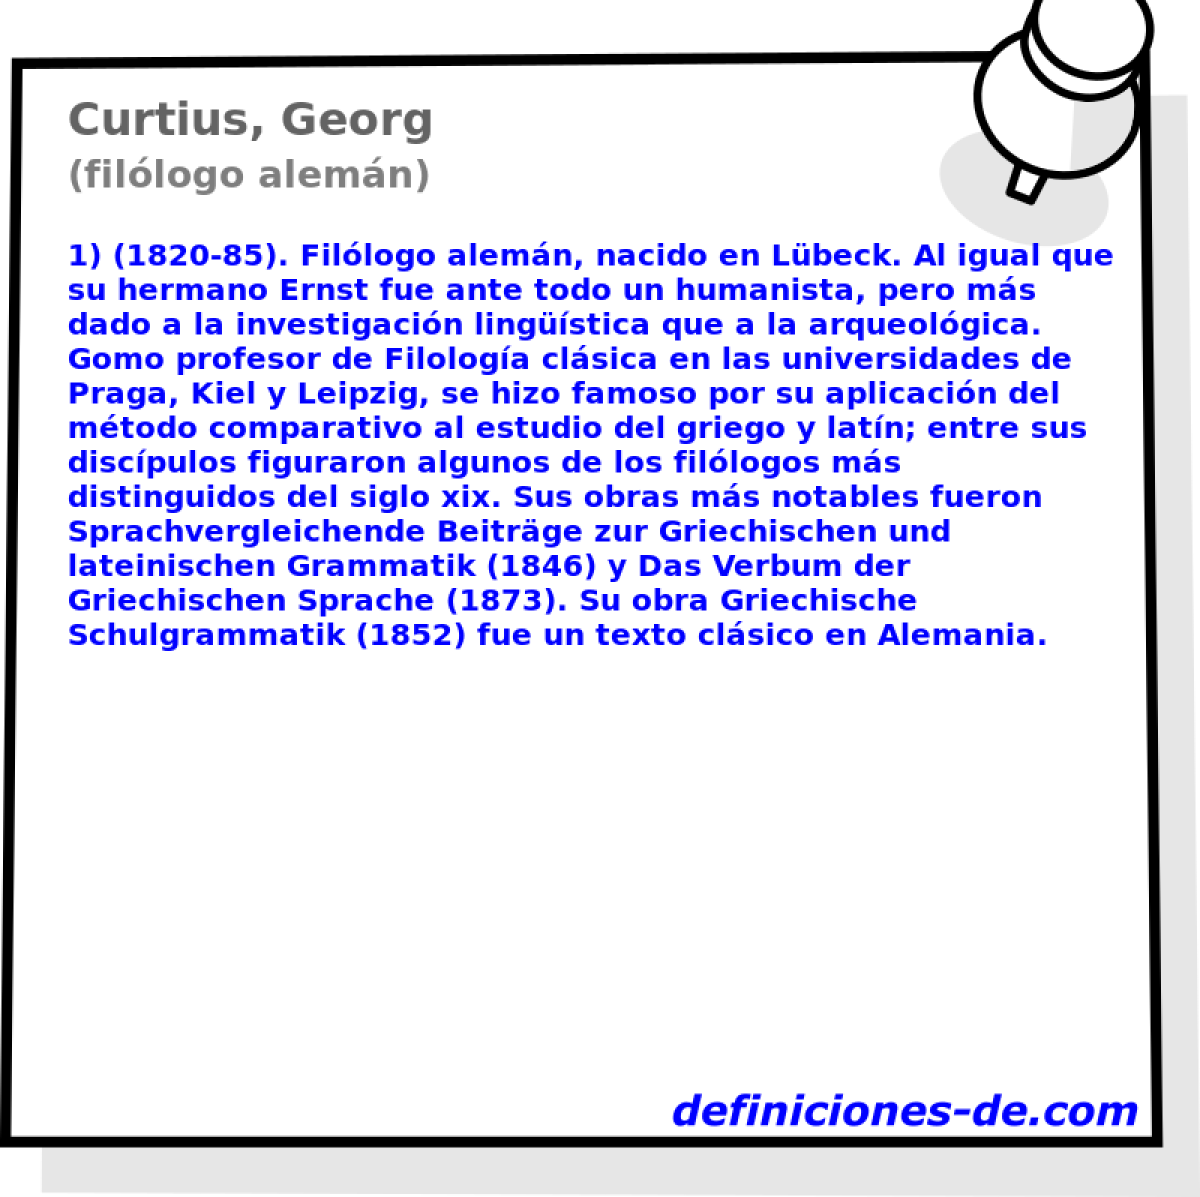 Curtius, Georg (fillogo alemn)